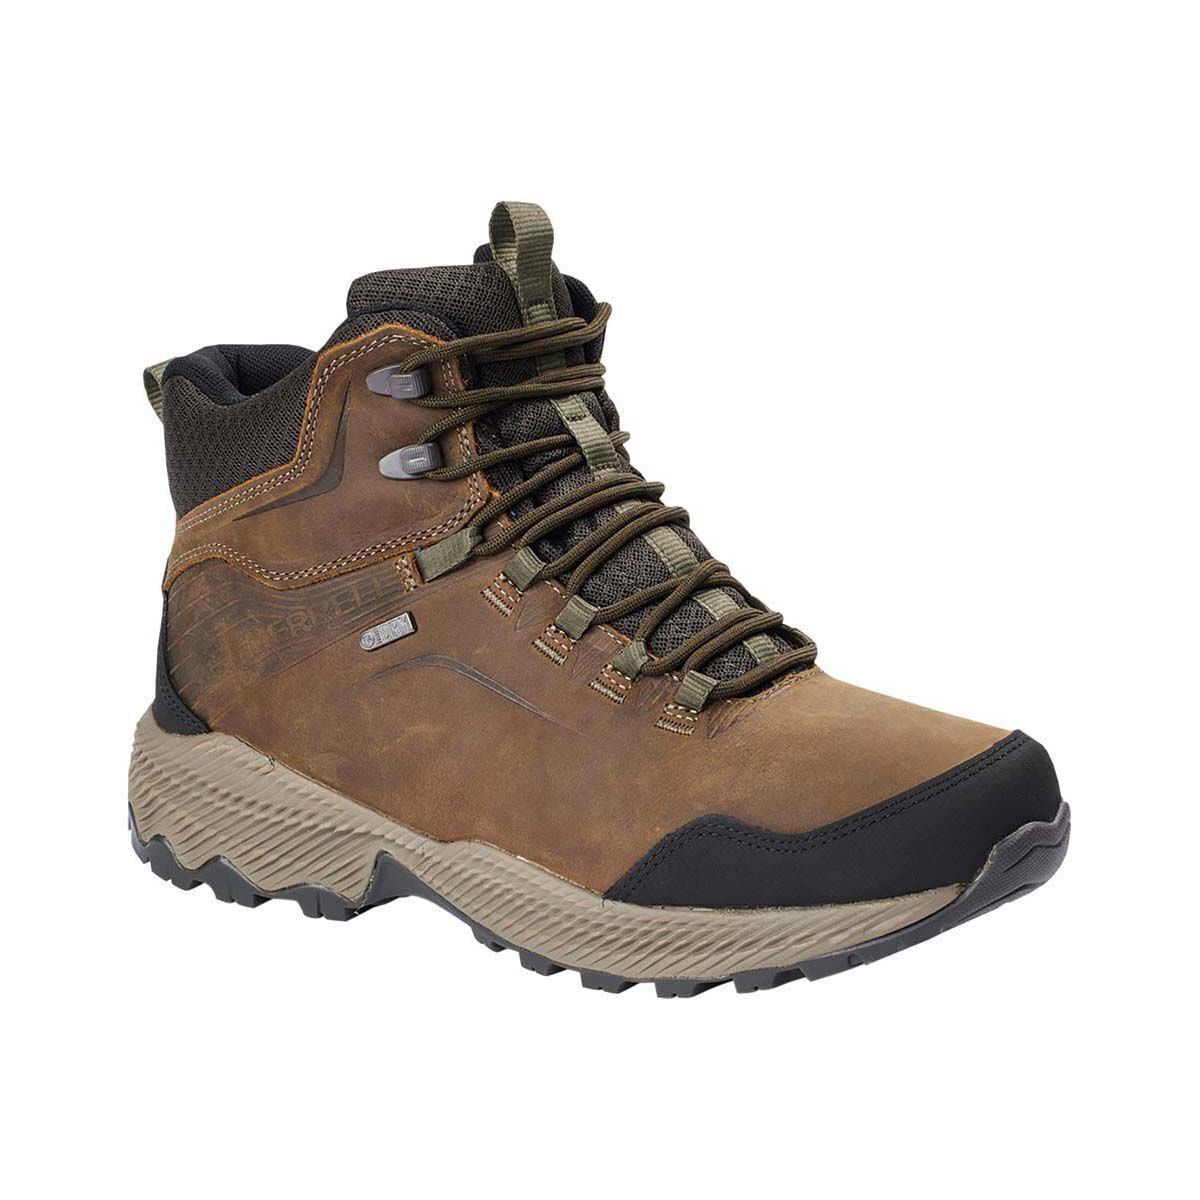 waterproof hiking boots australia